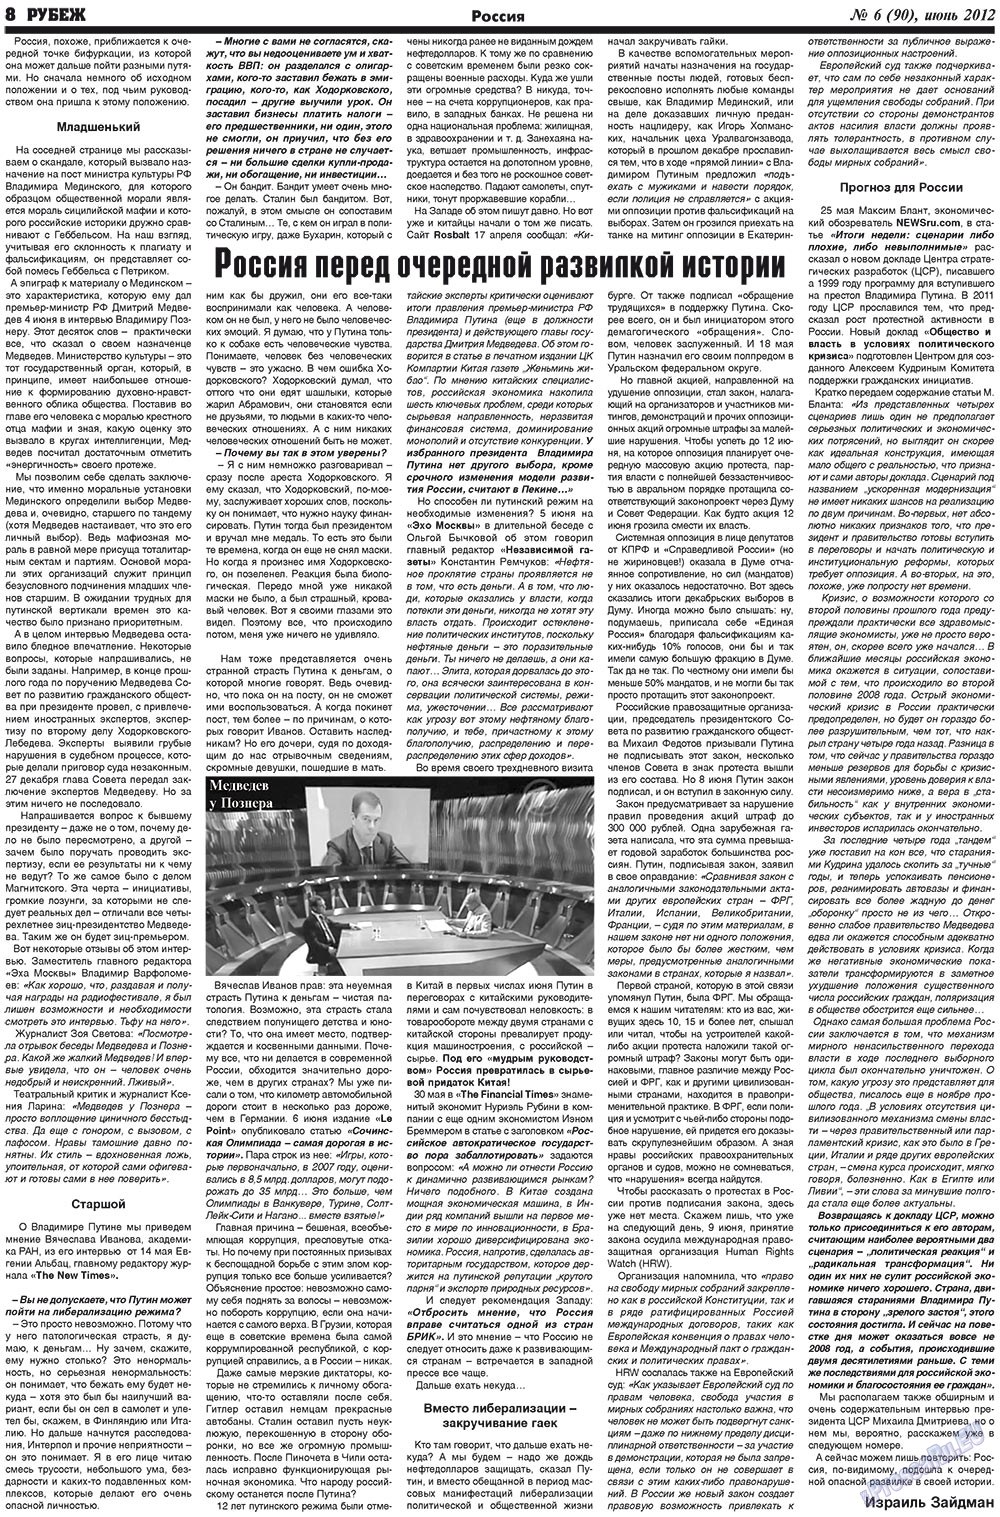 Рубеж, газета. 2012 №6 стр.8